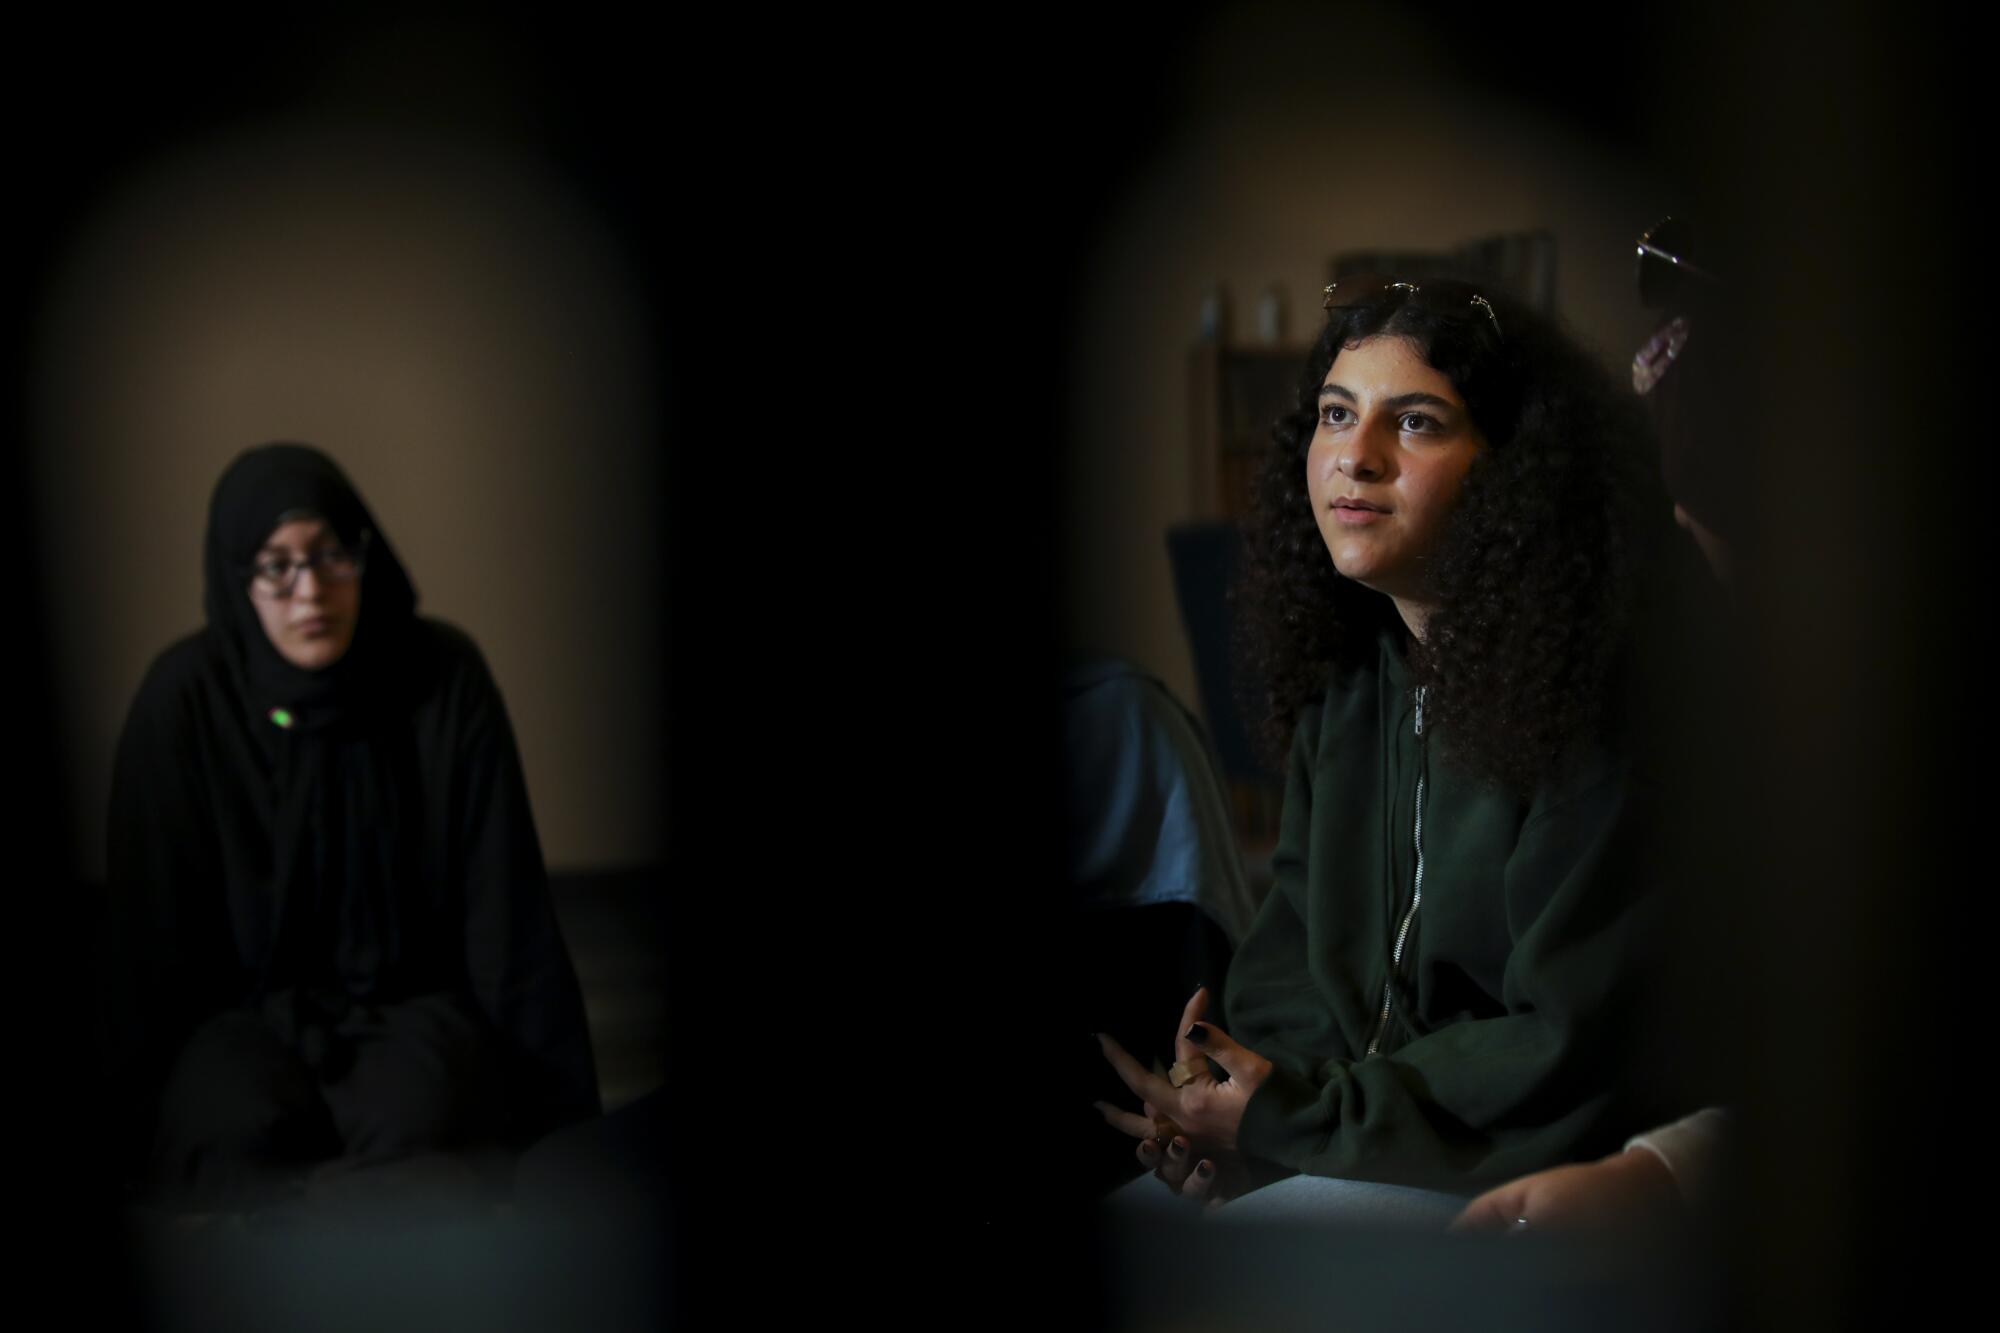 Hanae Bentchich, 21, left, and Dalal Oyoun, 17